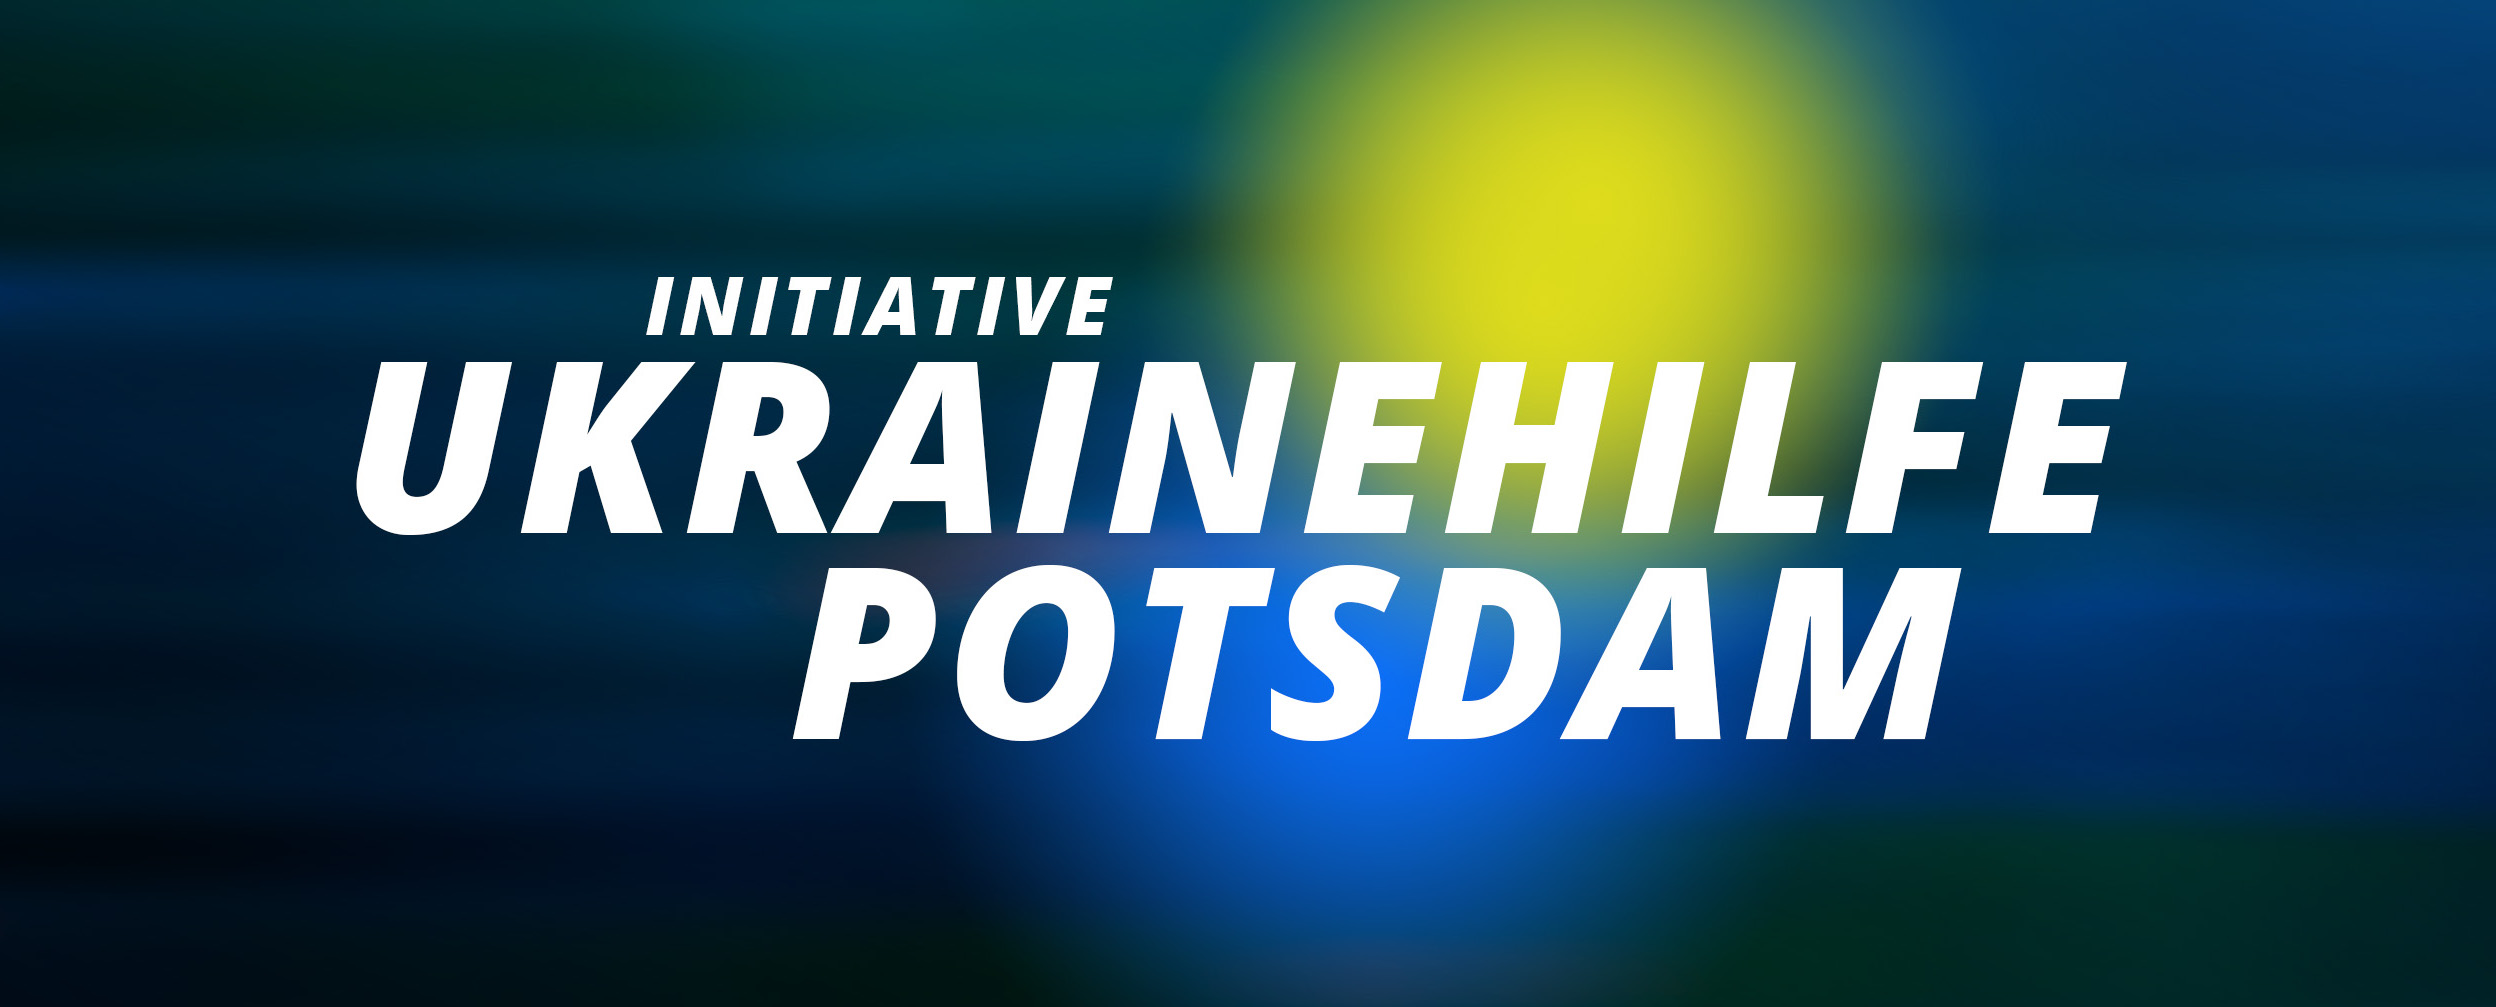 Initiative Ukraine Hilfe Potsdam